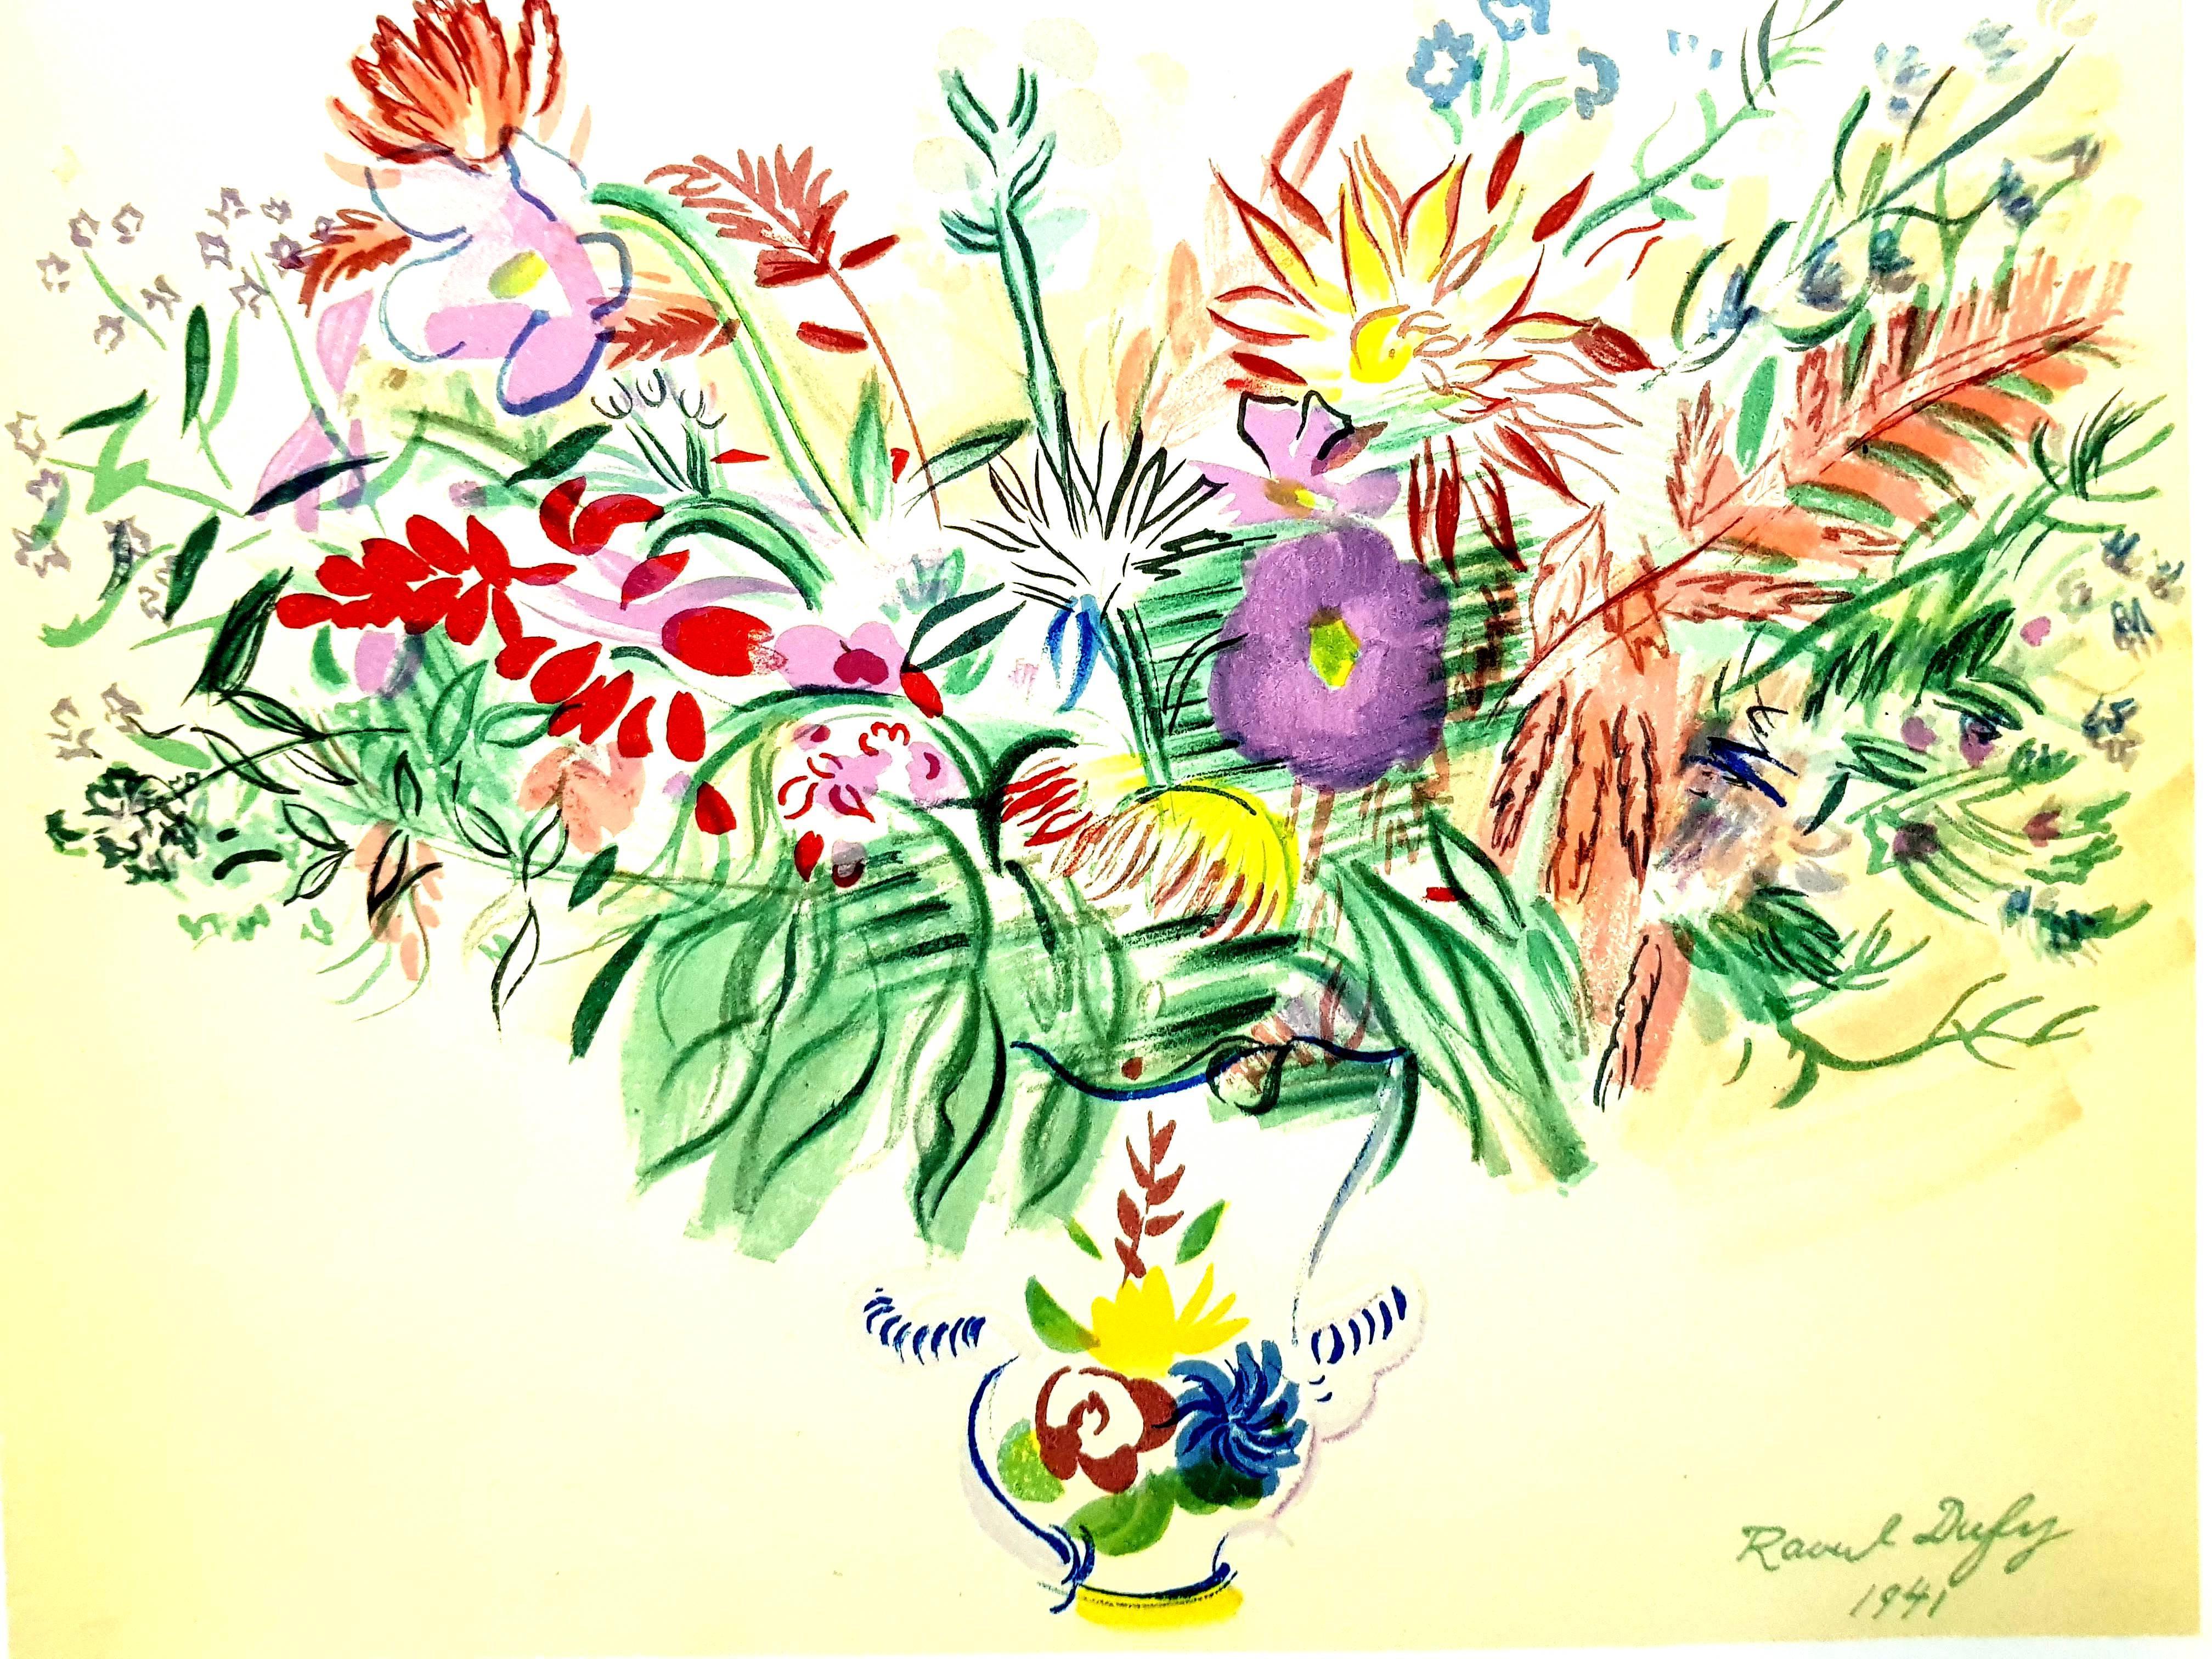 (after) Raoul Dufy Portrait Print - Flowers - Lithograph